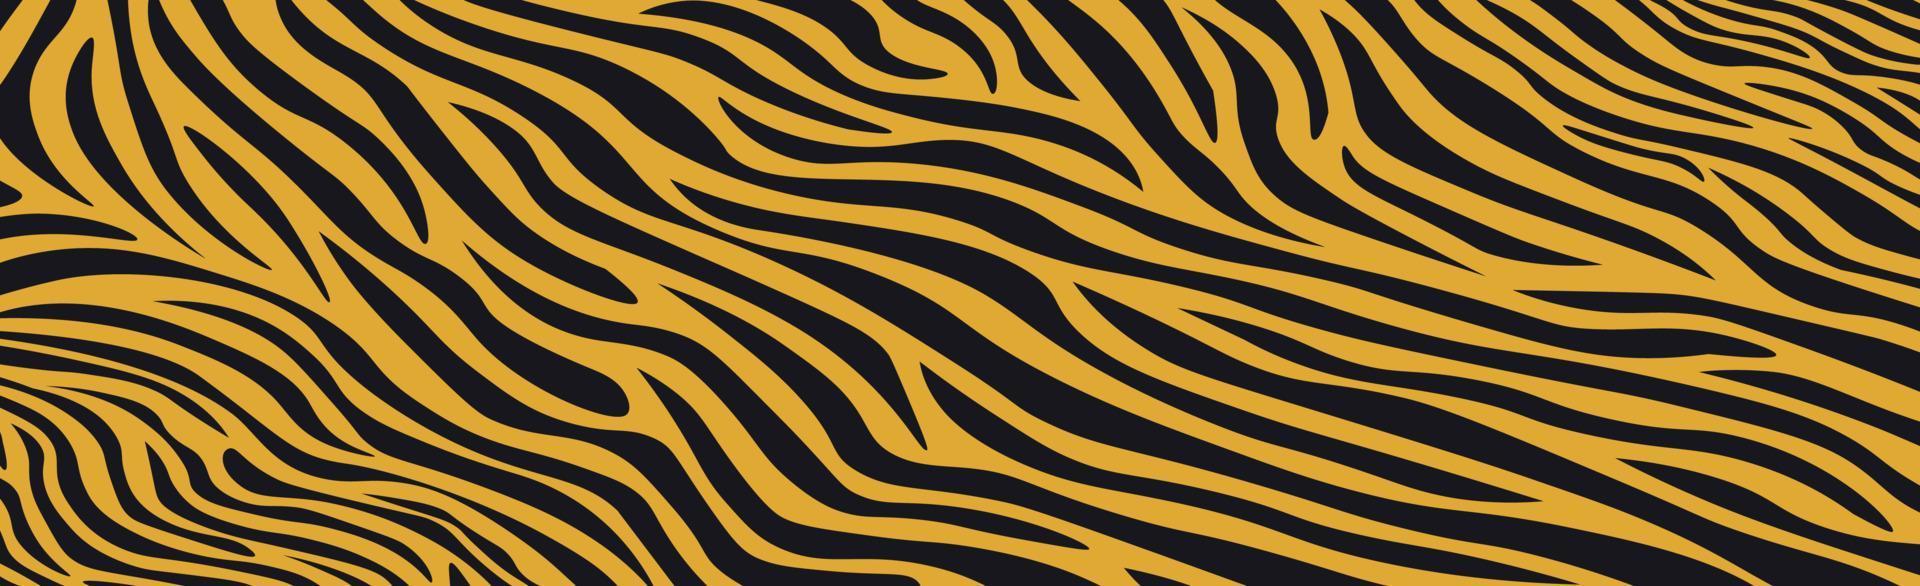 Panorama-Textur der Fellhaut des bengalischen Tigers - Vektor